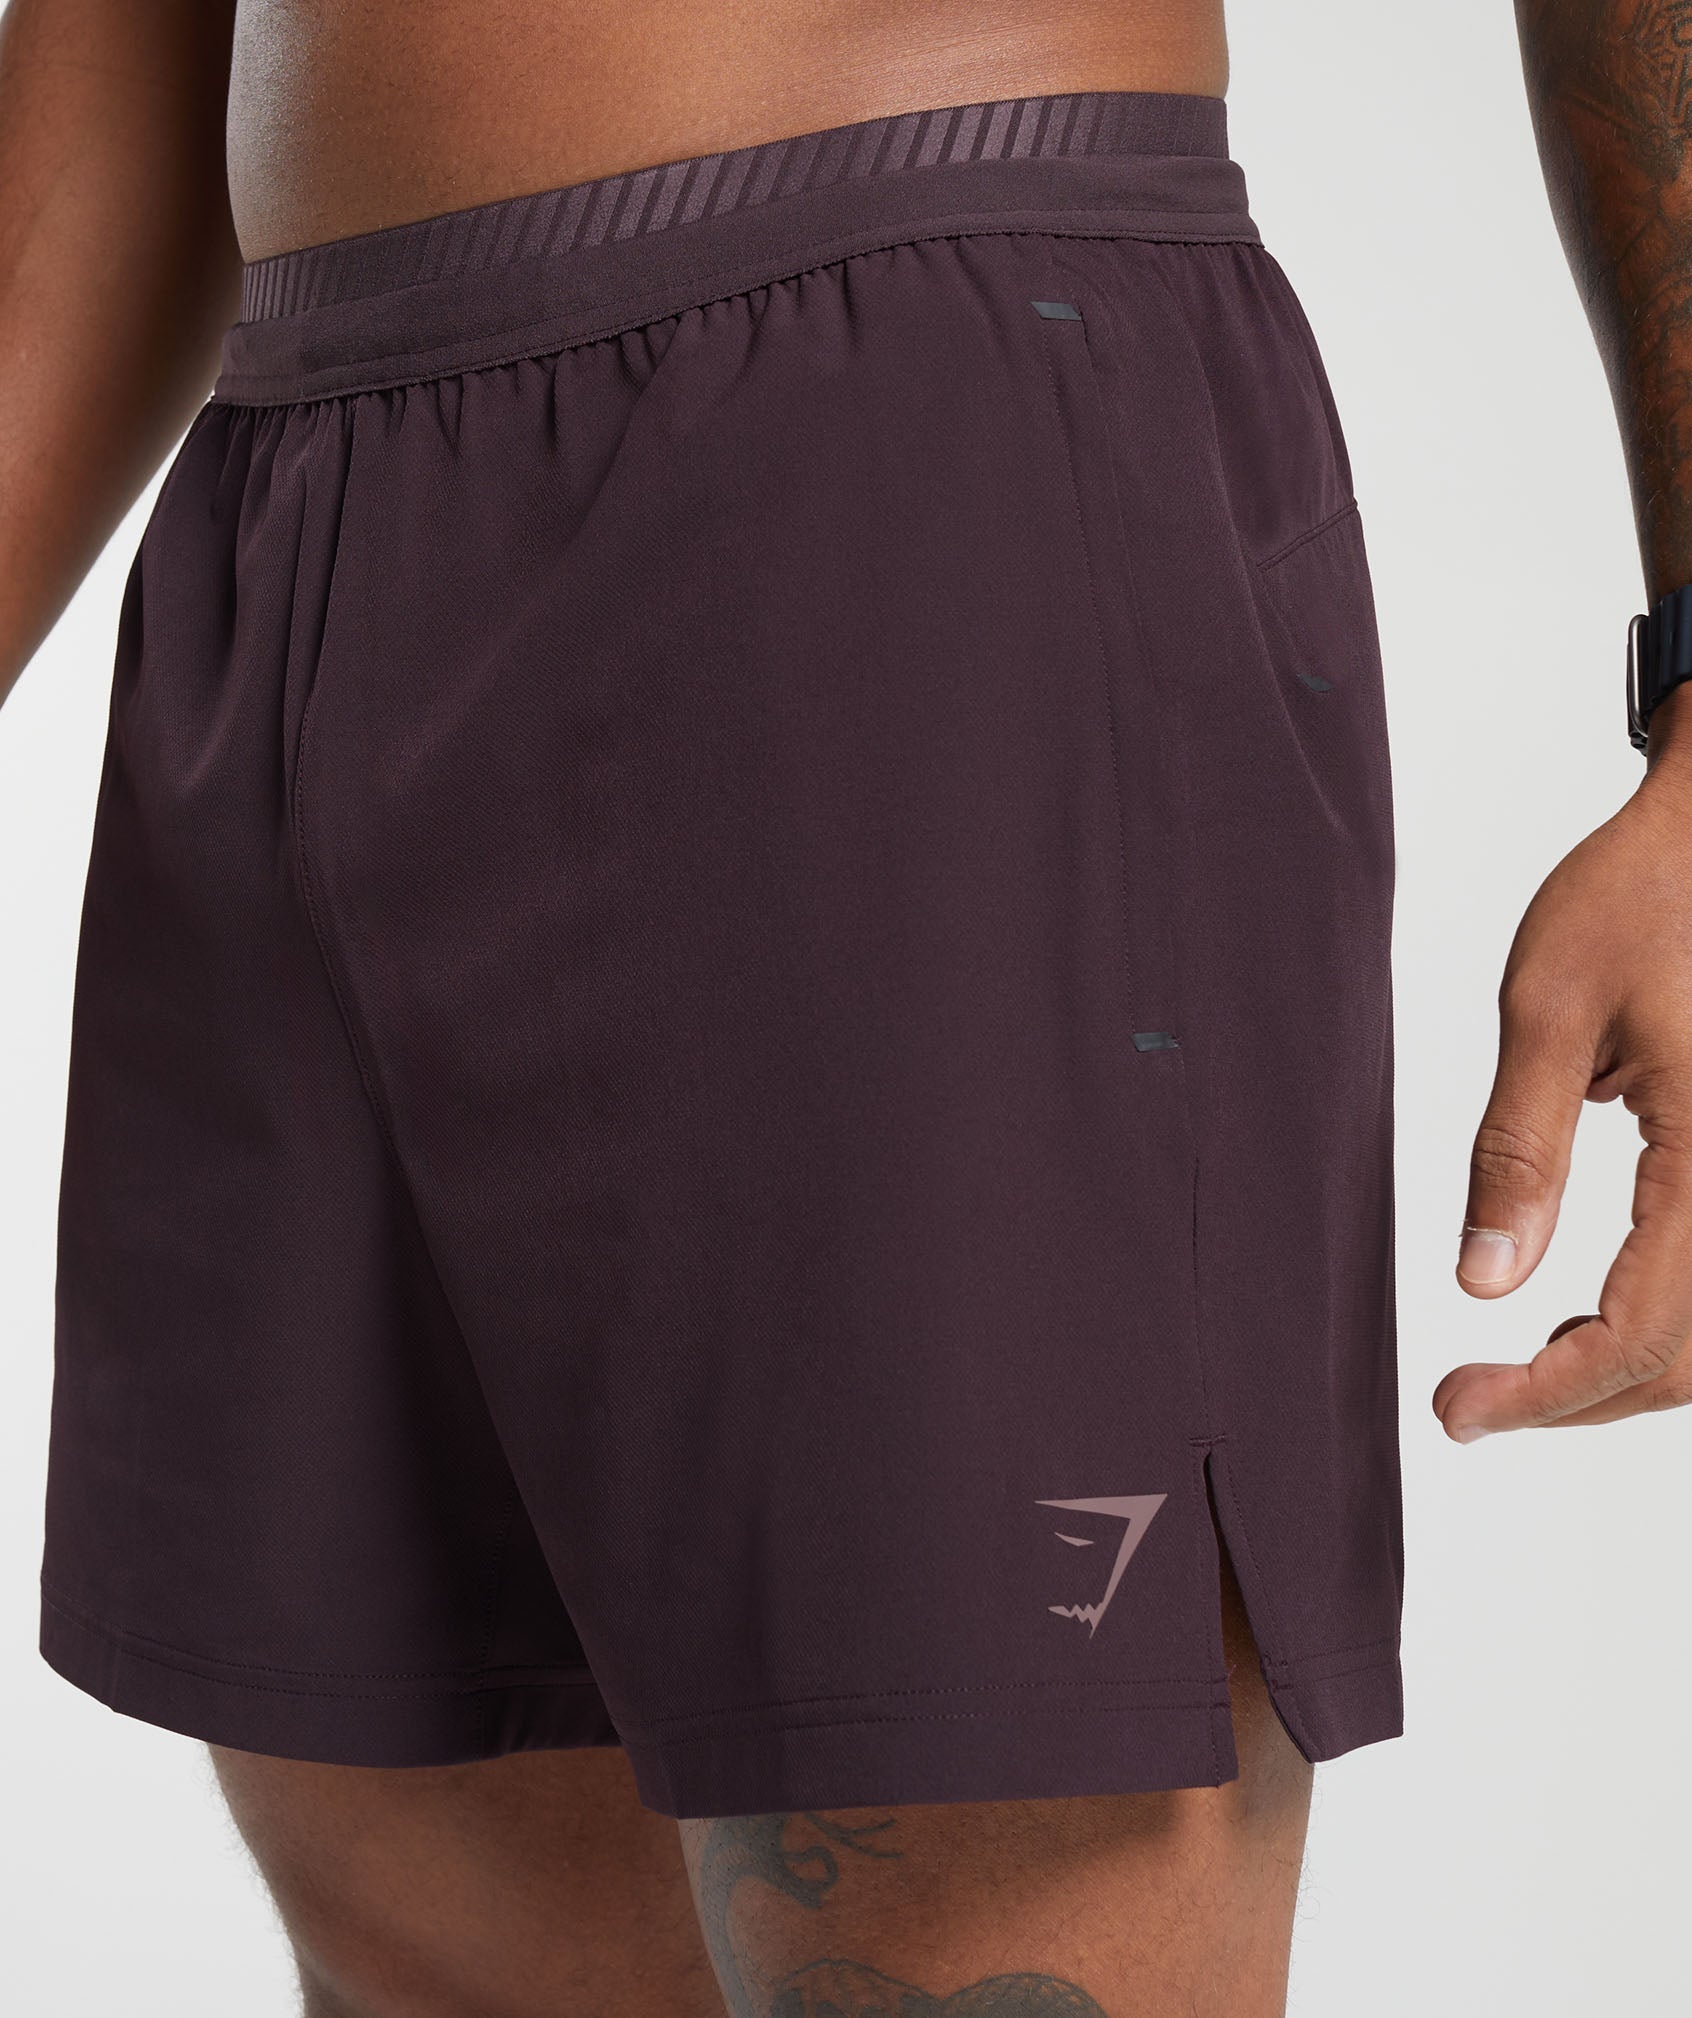 Apex 5" Hybrid Shorts in Plum Brown - view 5